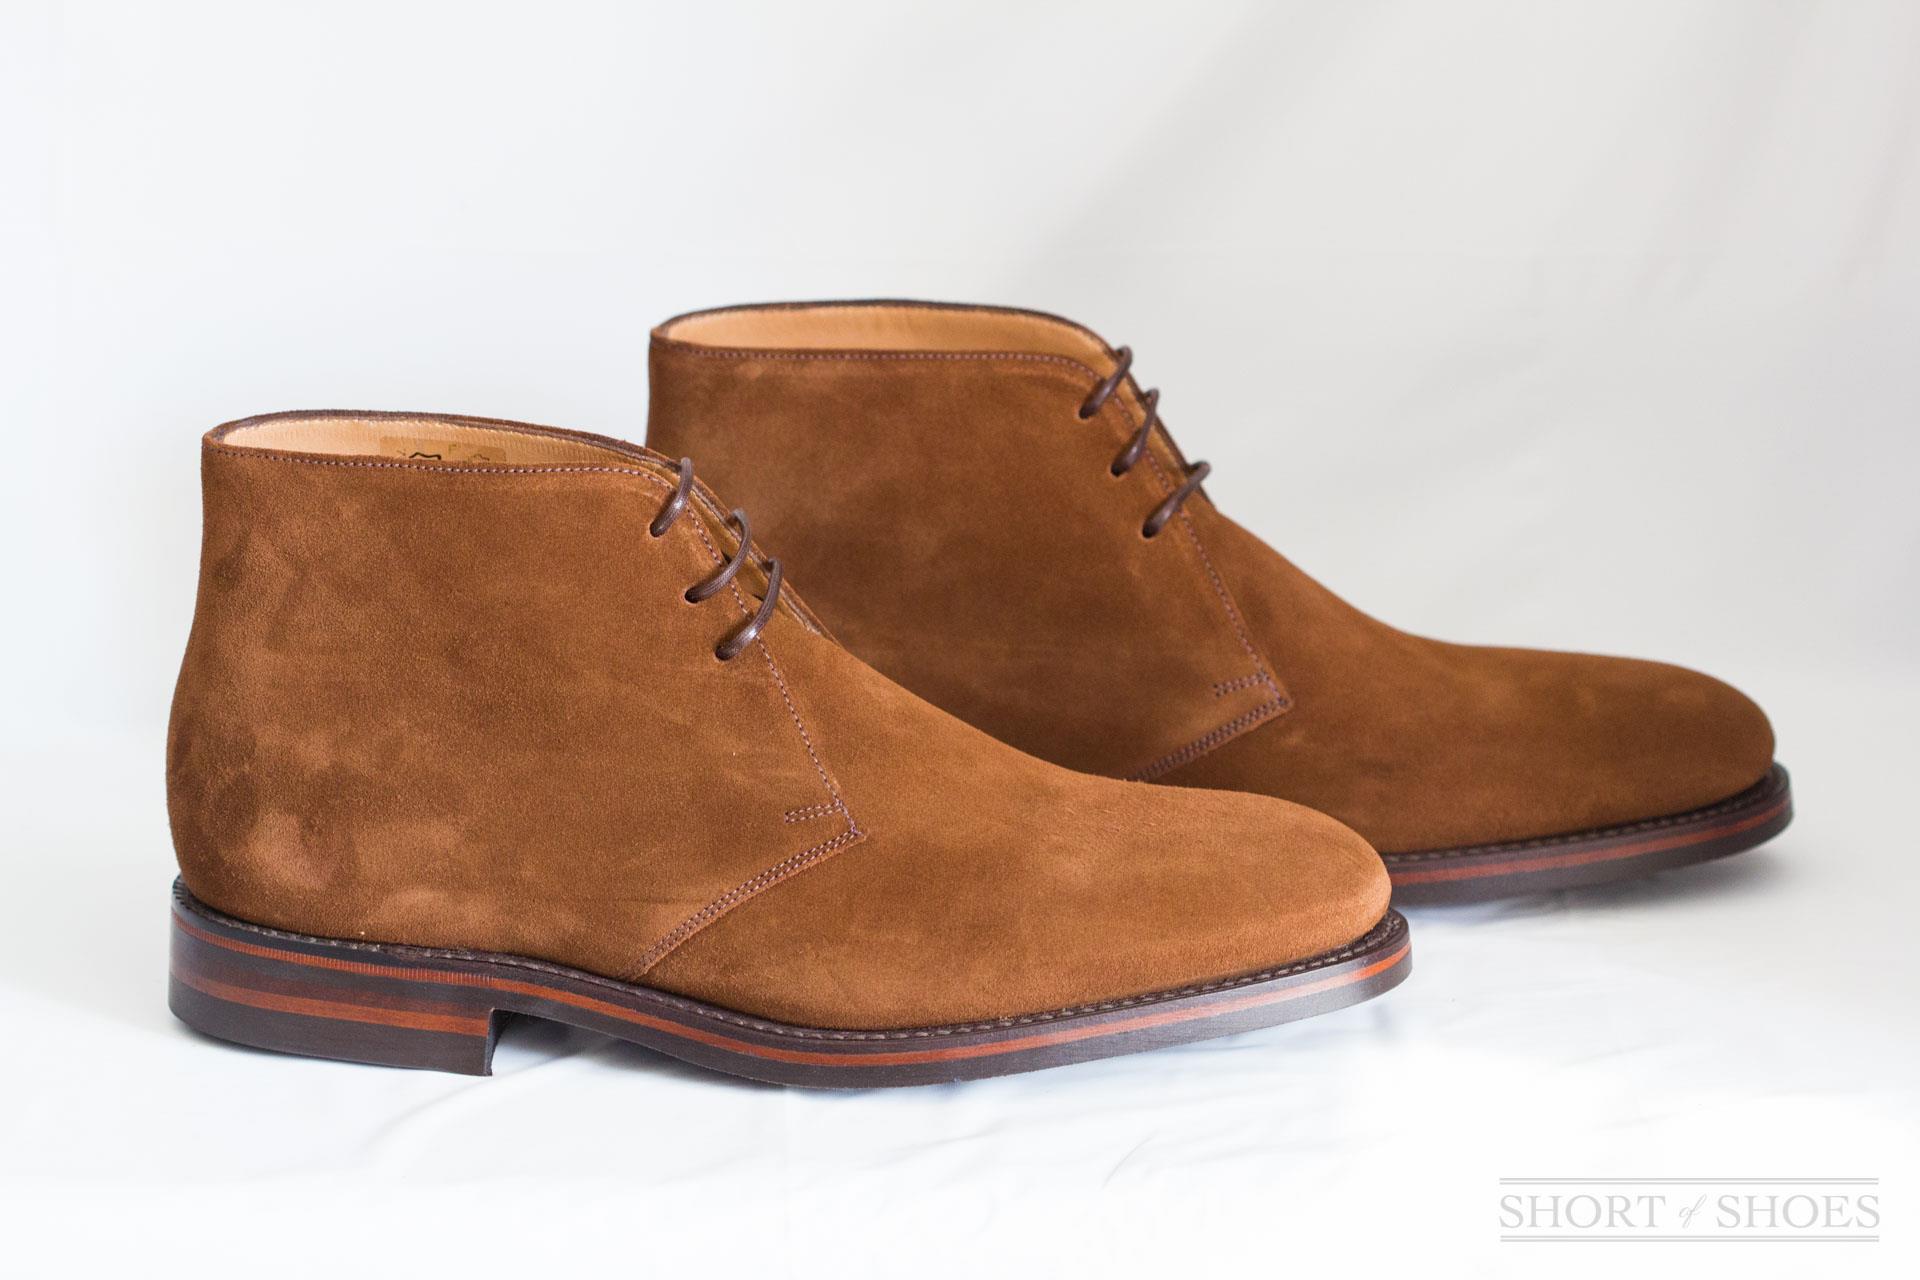 Loake Shoes Review - Kempton Suede Chukka 1880 Line